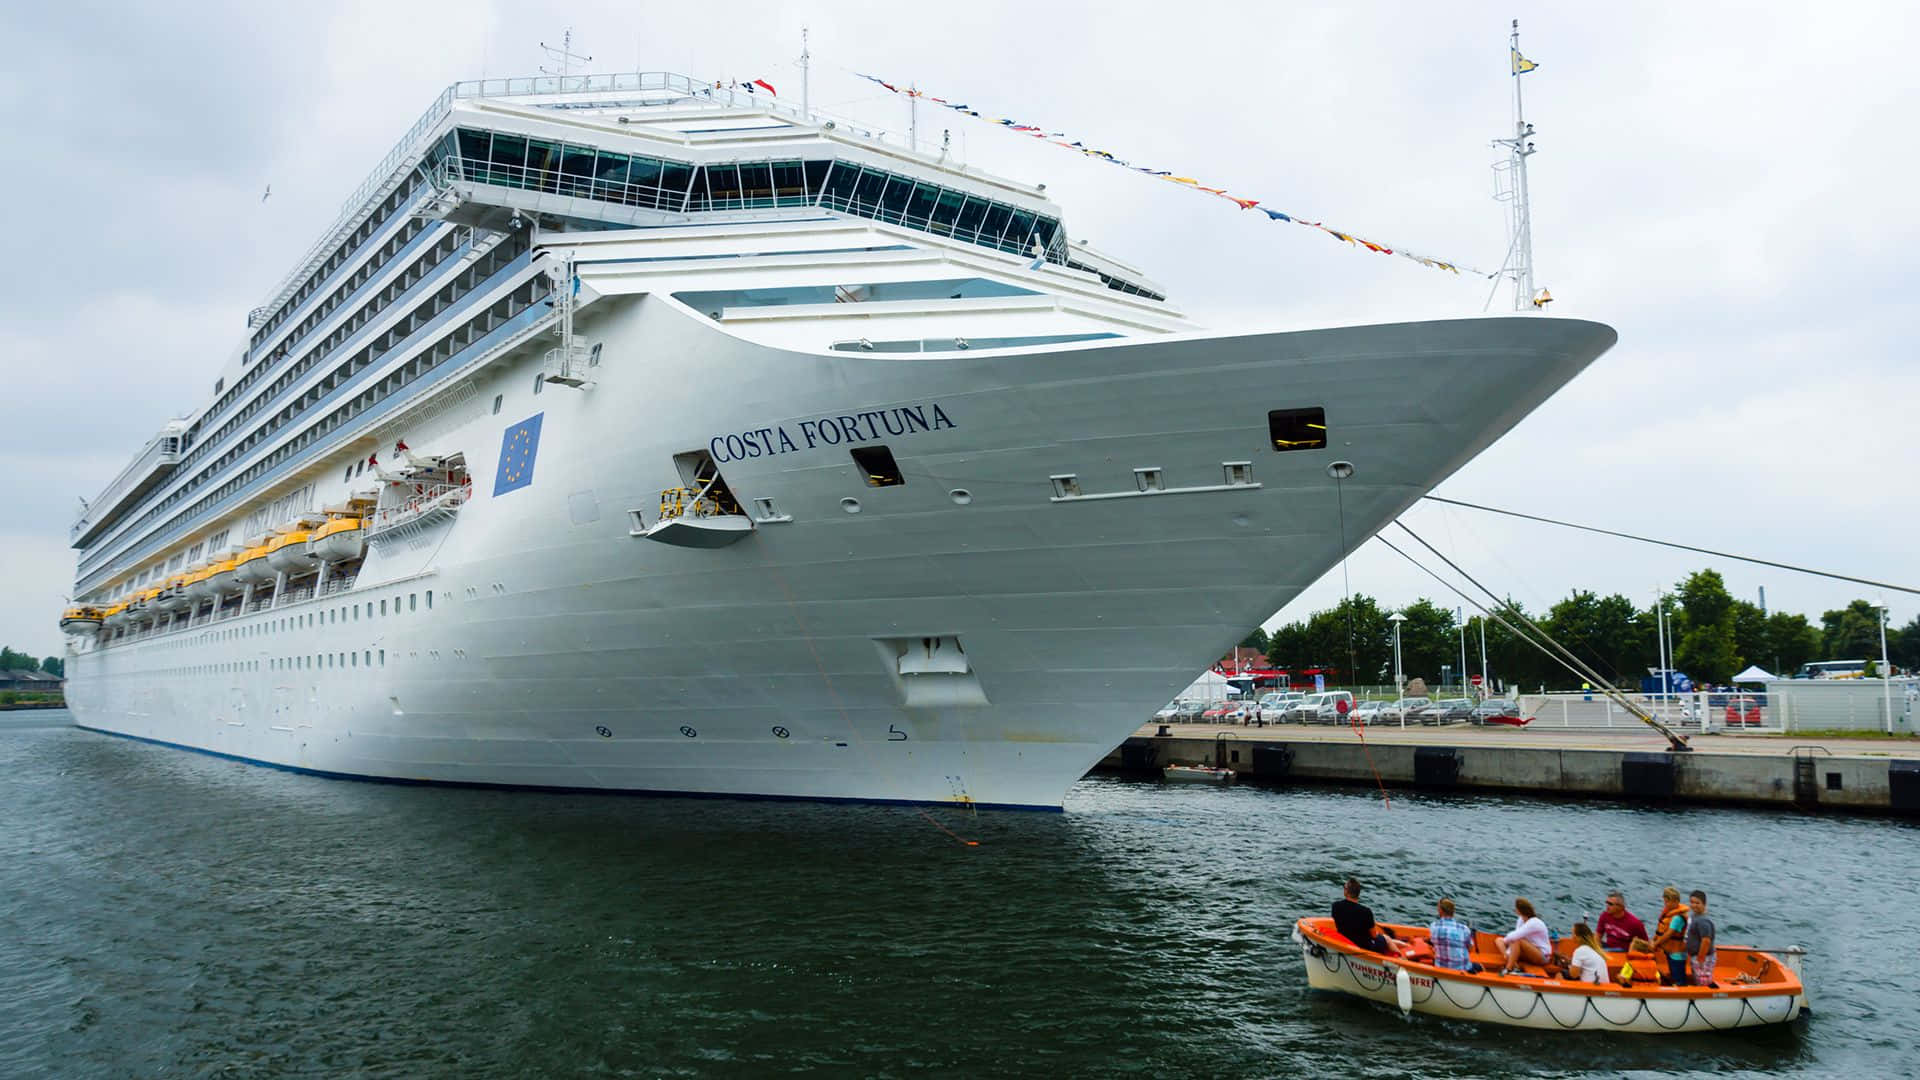 A passenger cruise ship sailing on the blue calm ocean